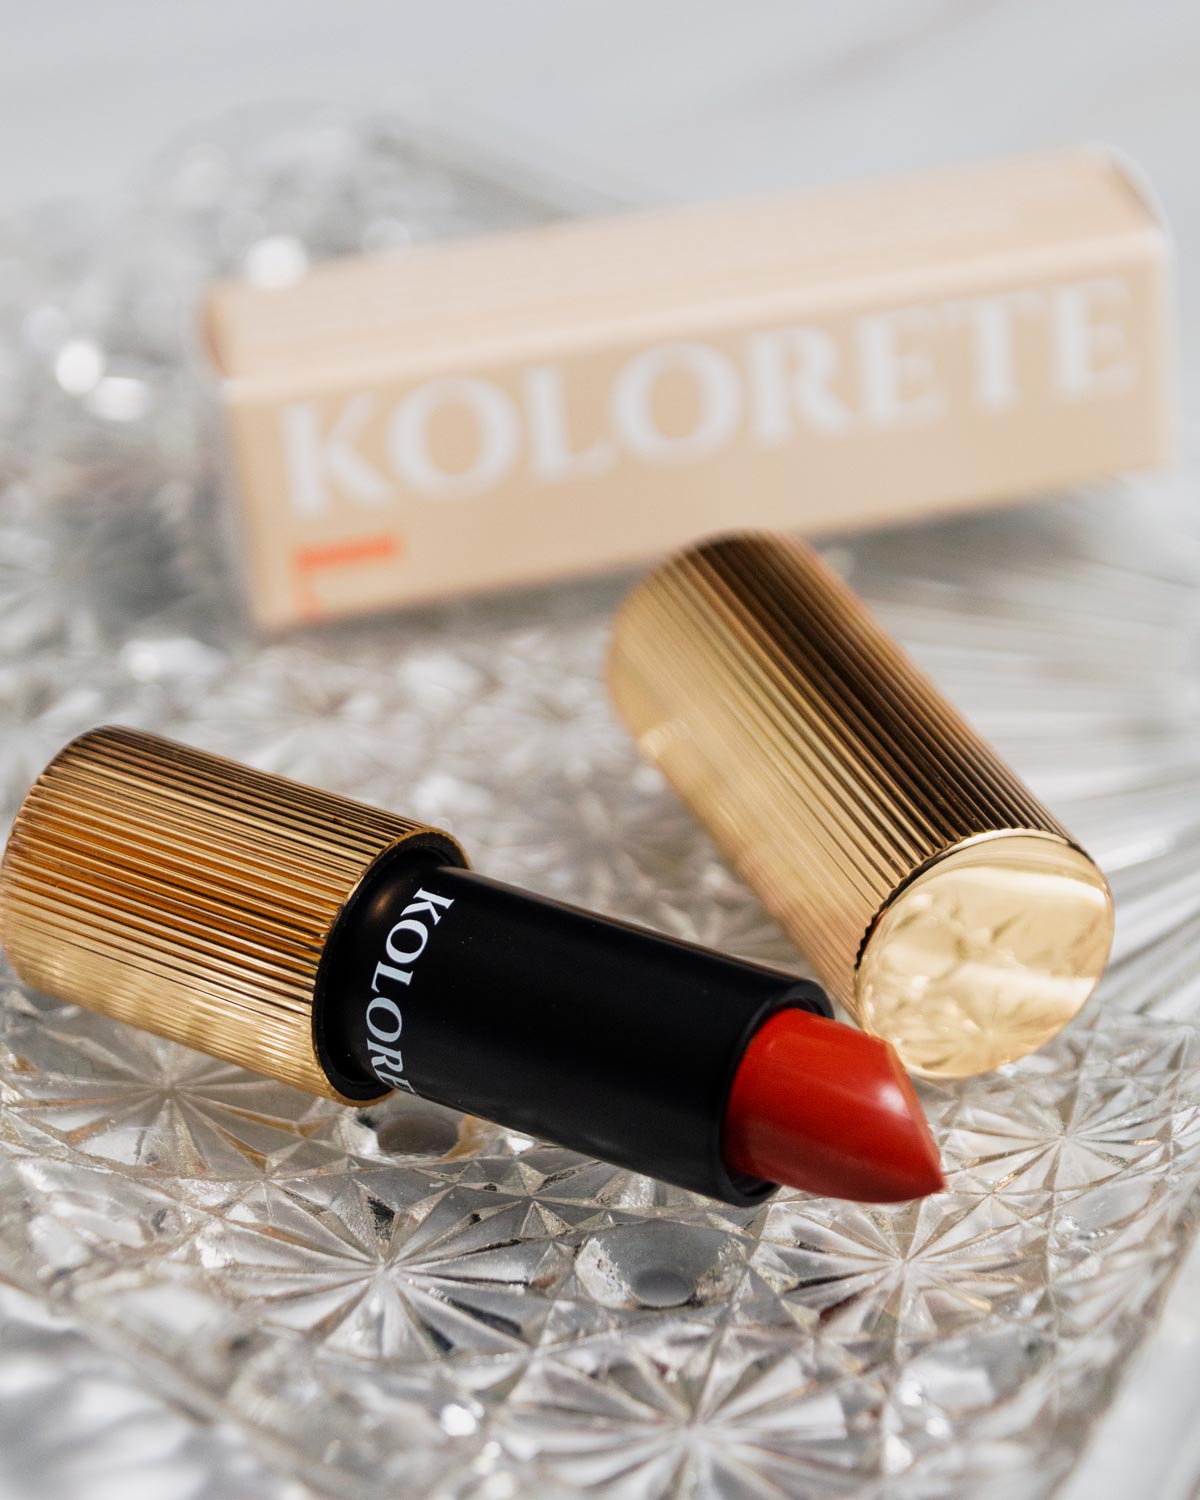 kolorete cosmetics filipino makeup brand in the us